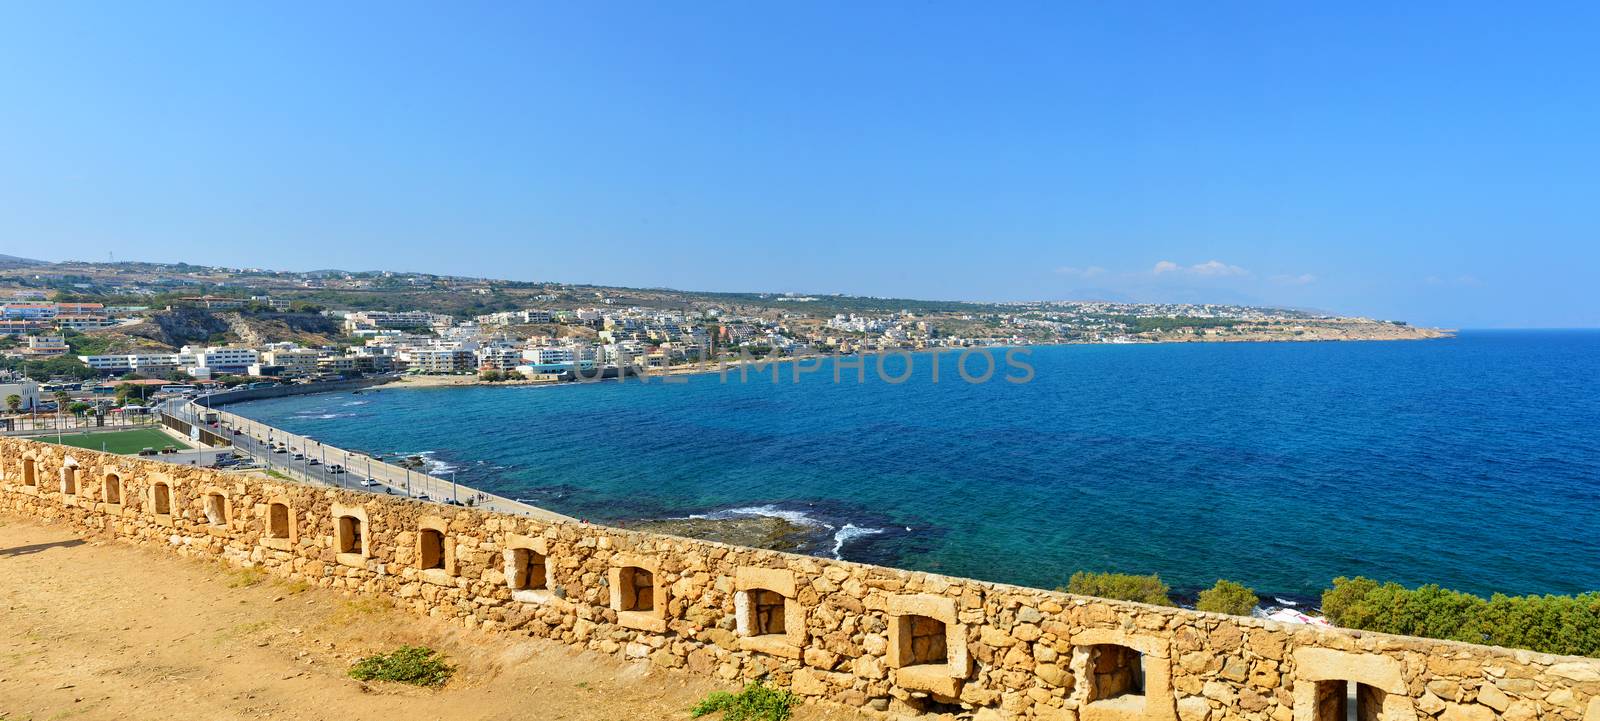 Rethymno Fortezza fortress city view by tony4urban